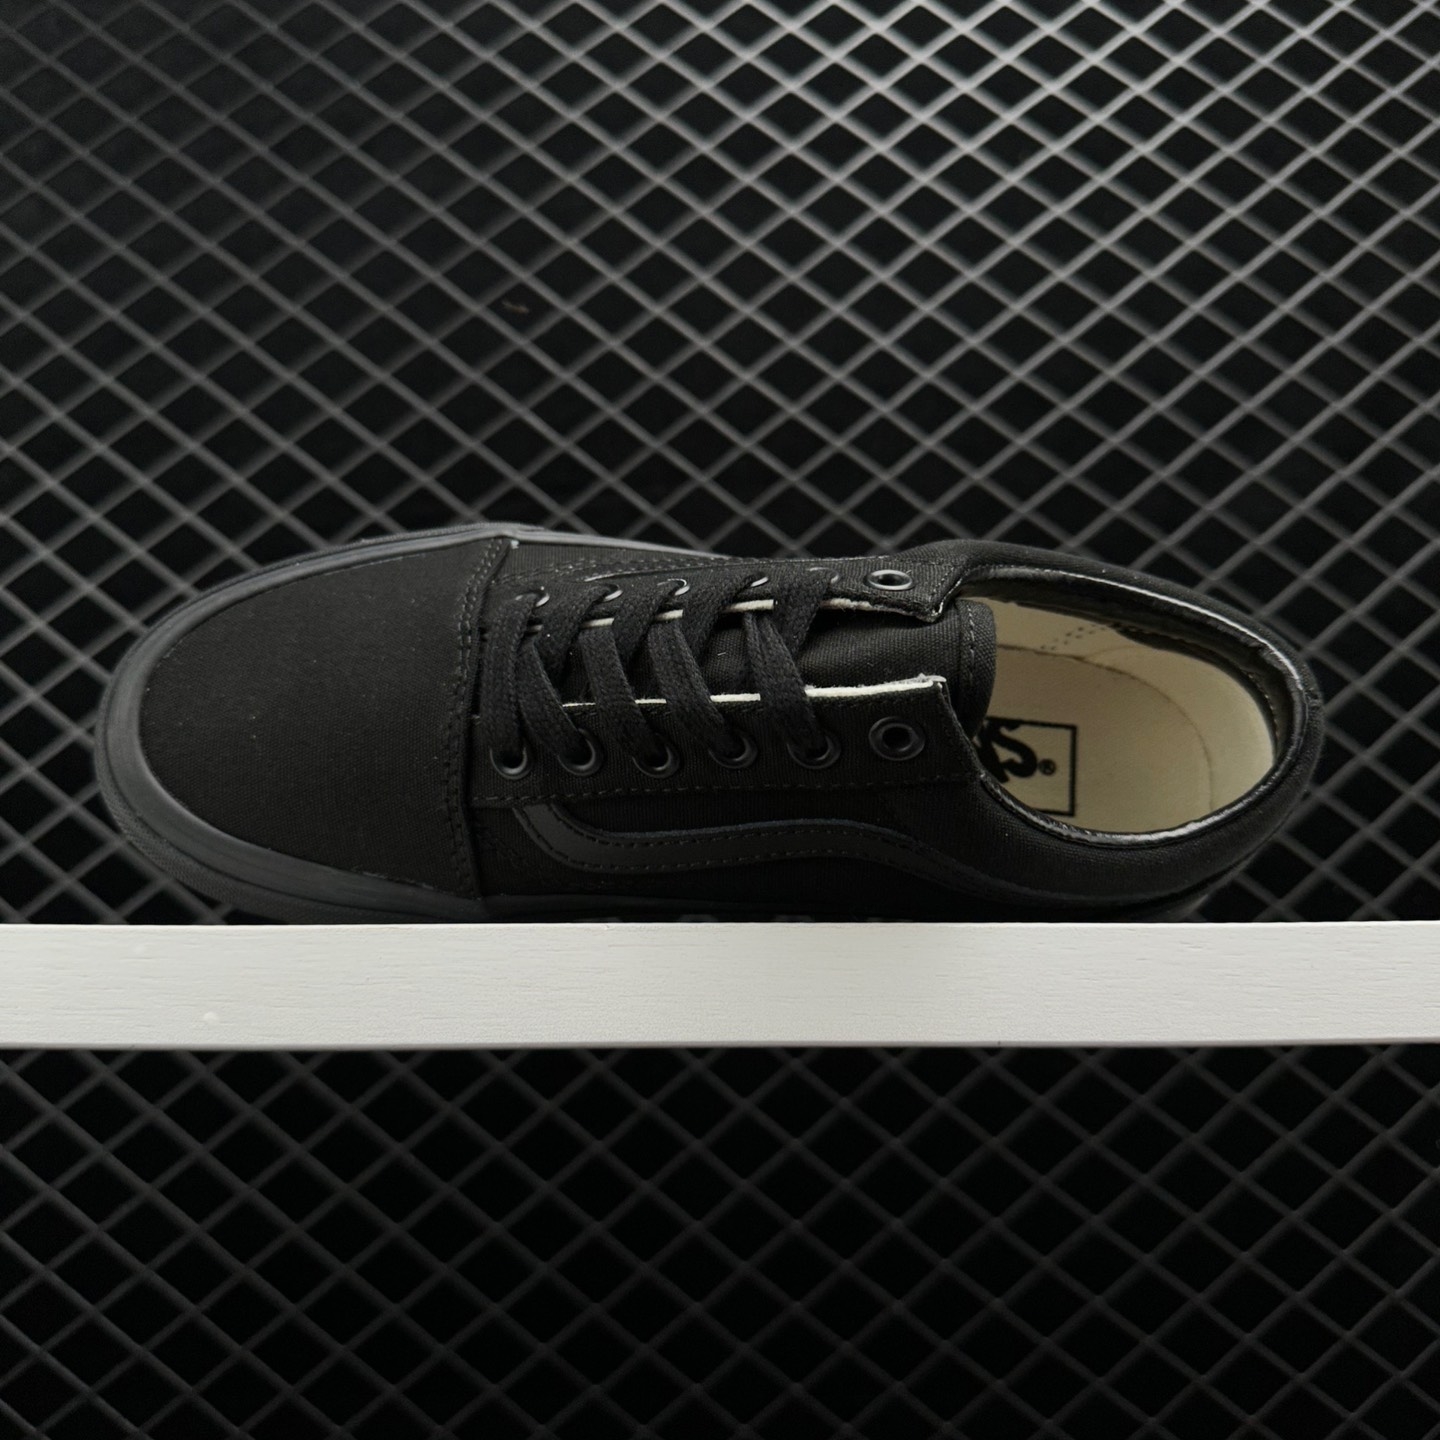 Vans Old Skool Black - Classic Sneakers for Stylish Men